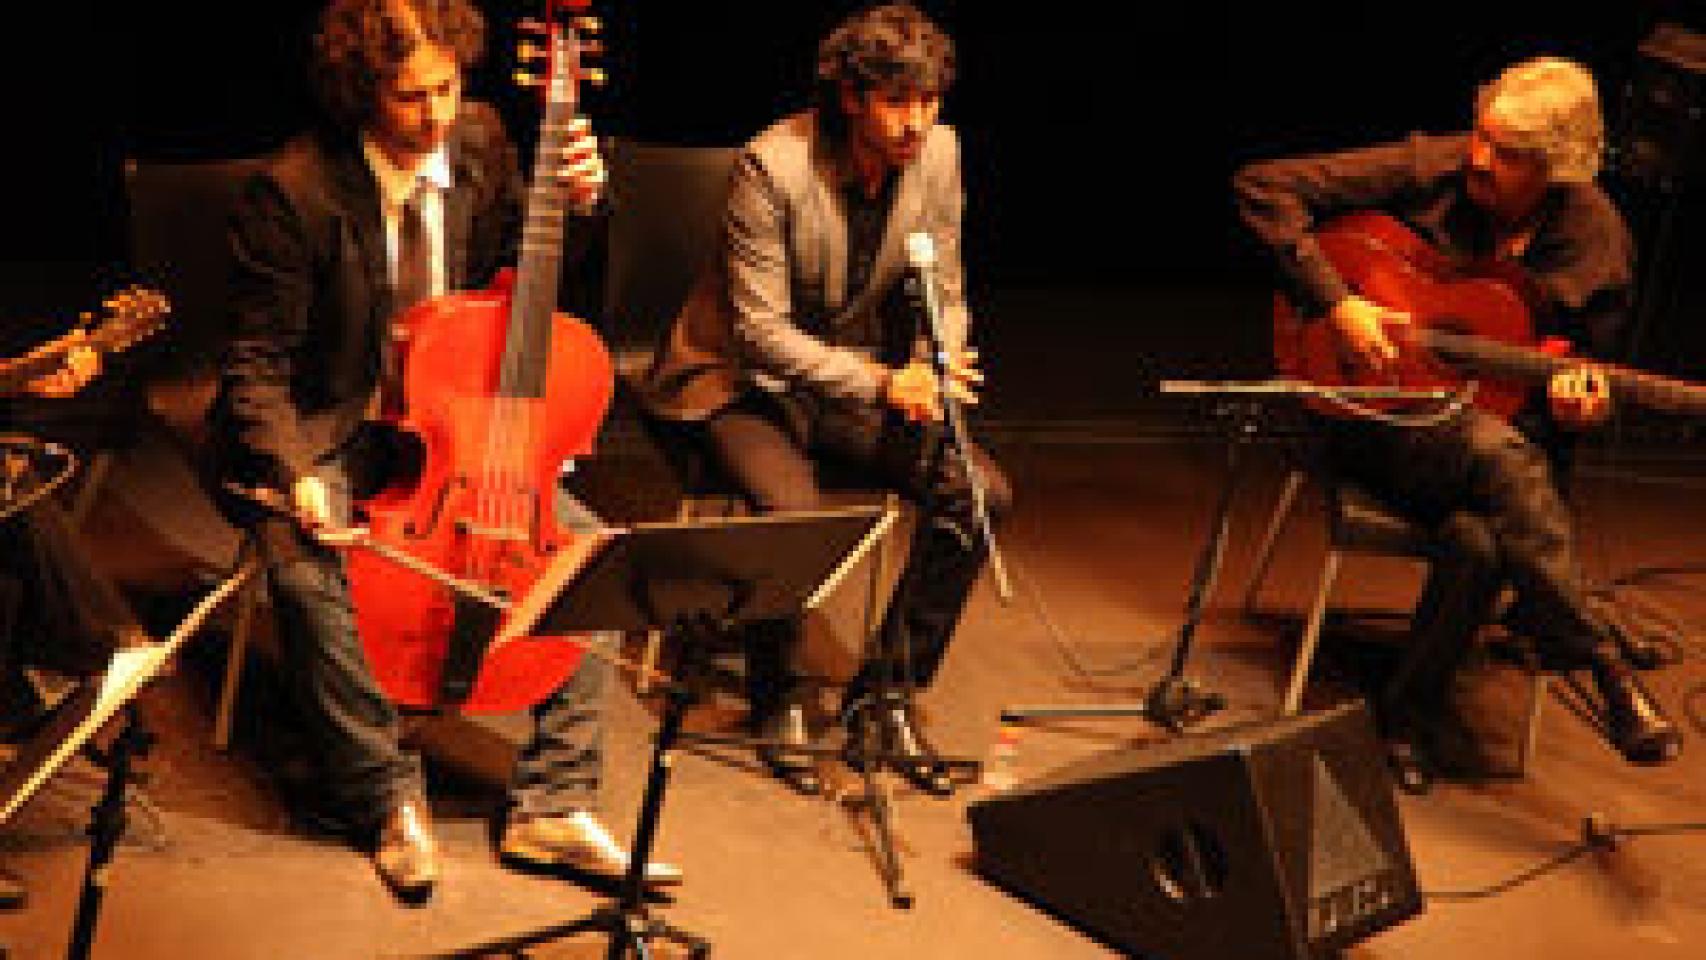 Image: Música barroca a mayor gloria del flamenco